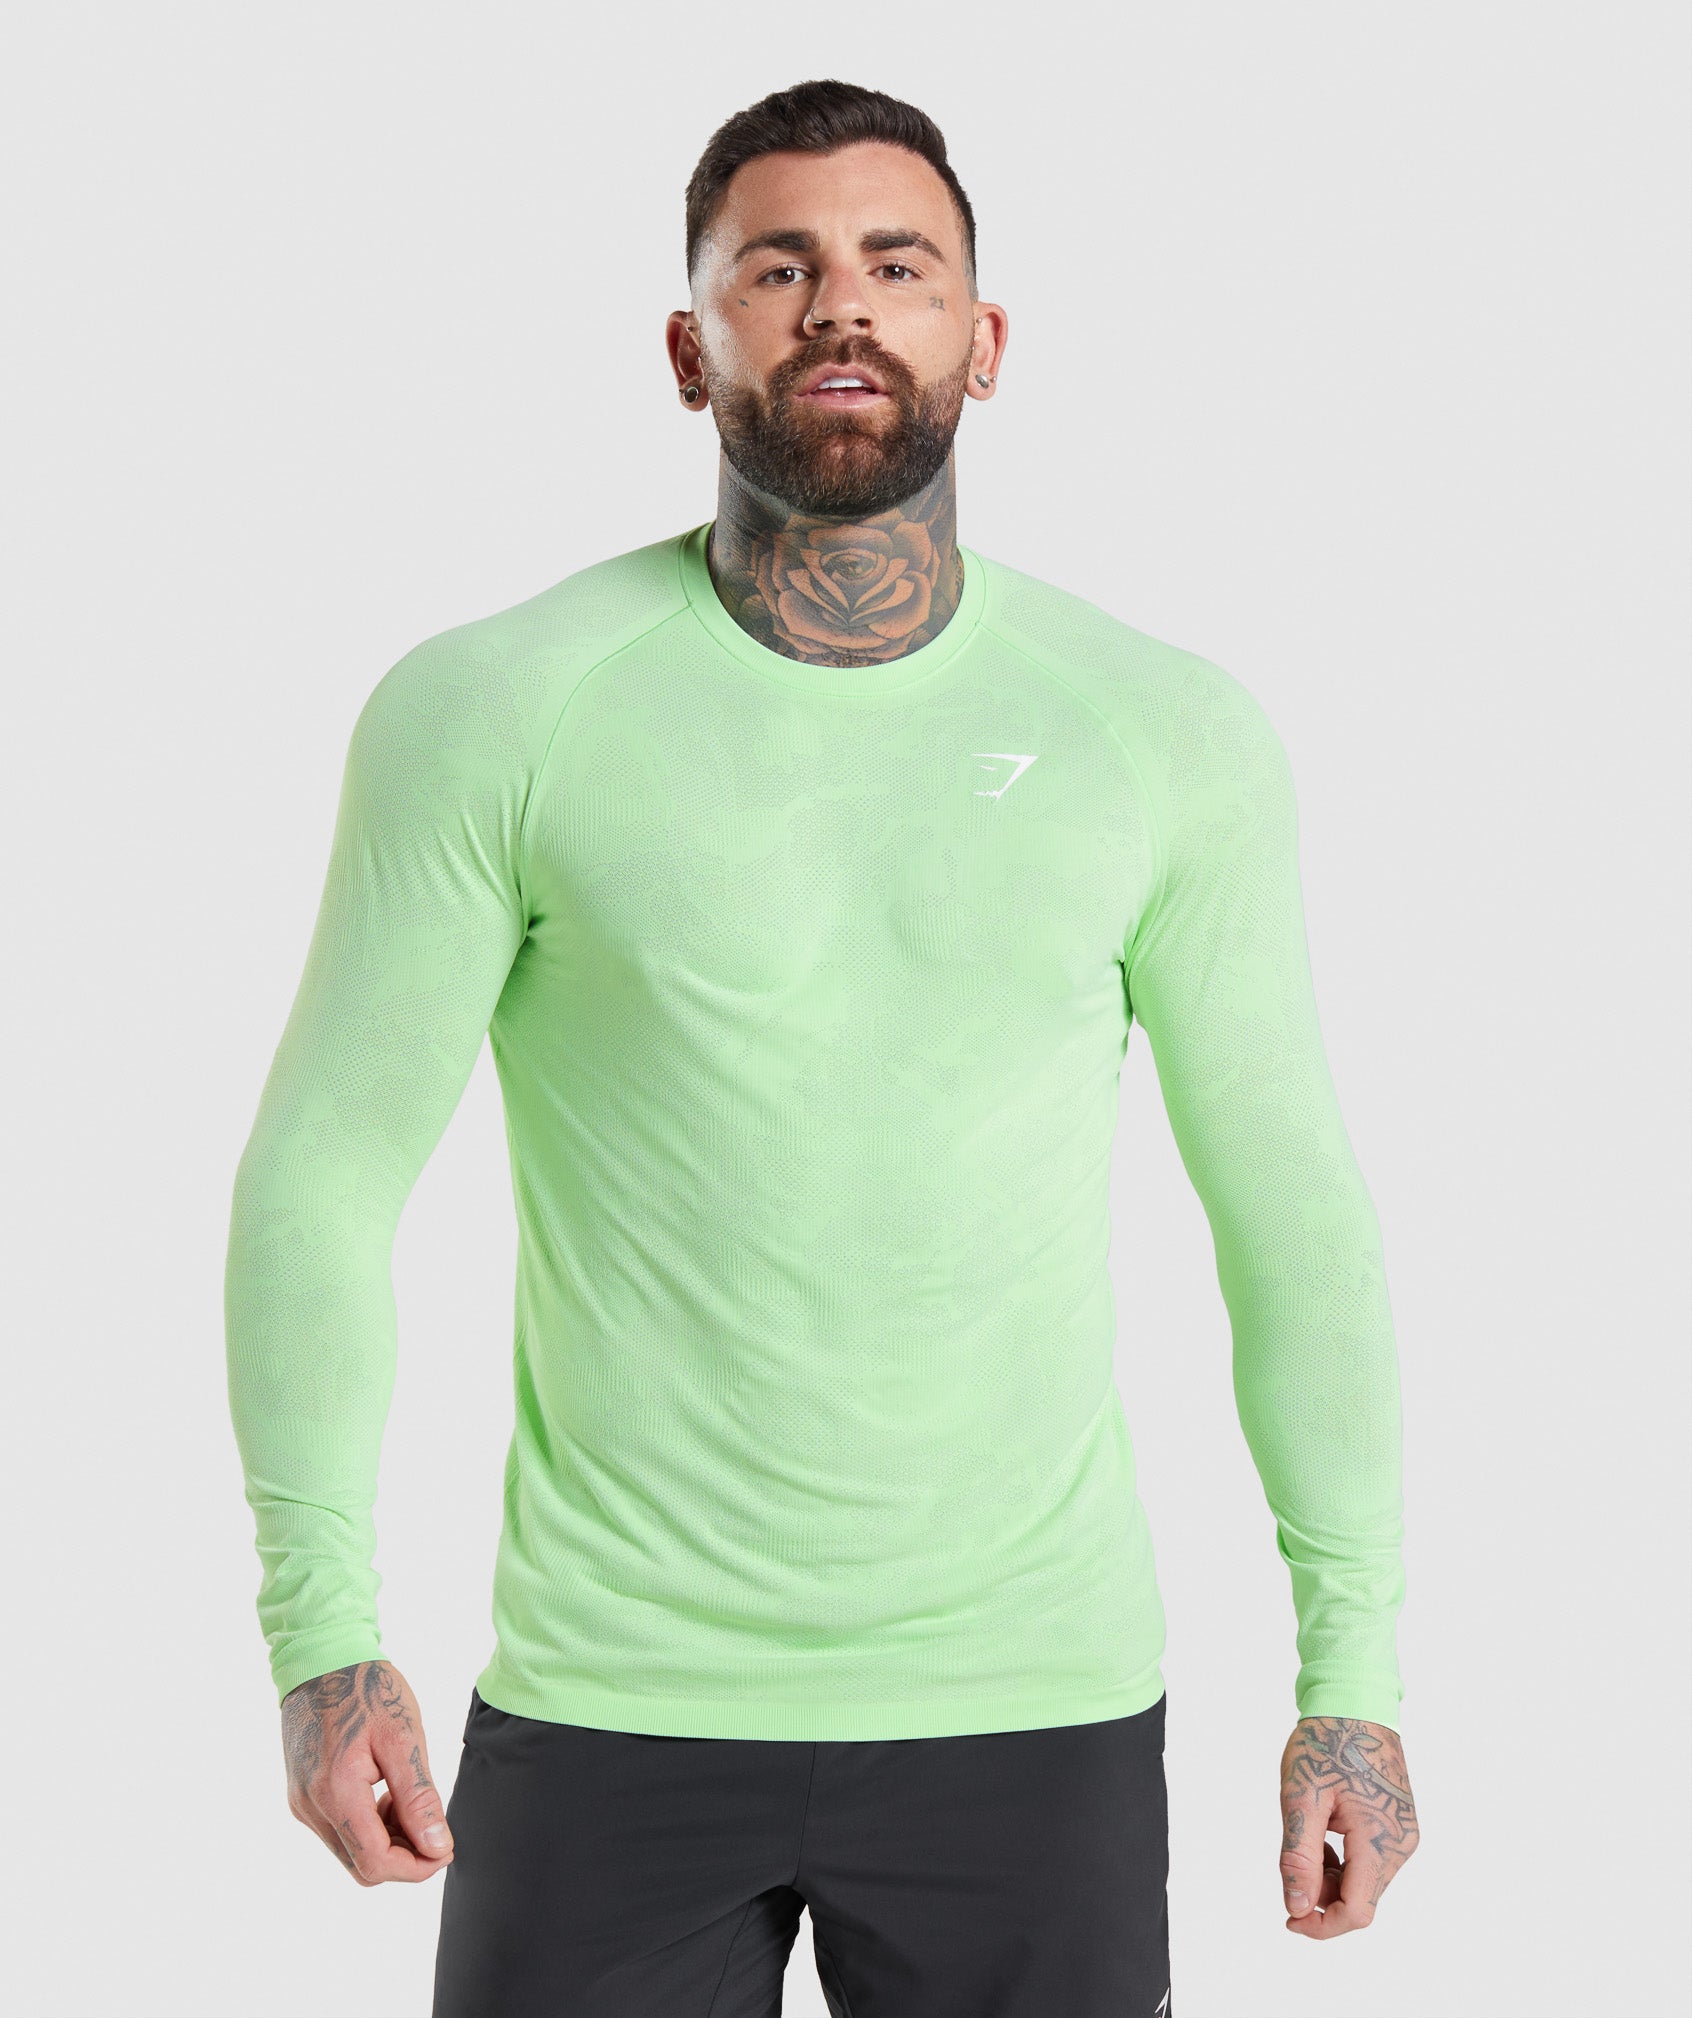 Nike Men's Hypercool Compression Long Sleeve Top 2.0 - Green